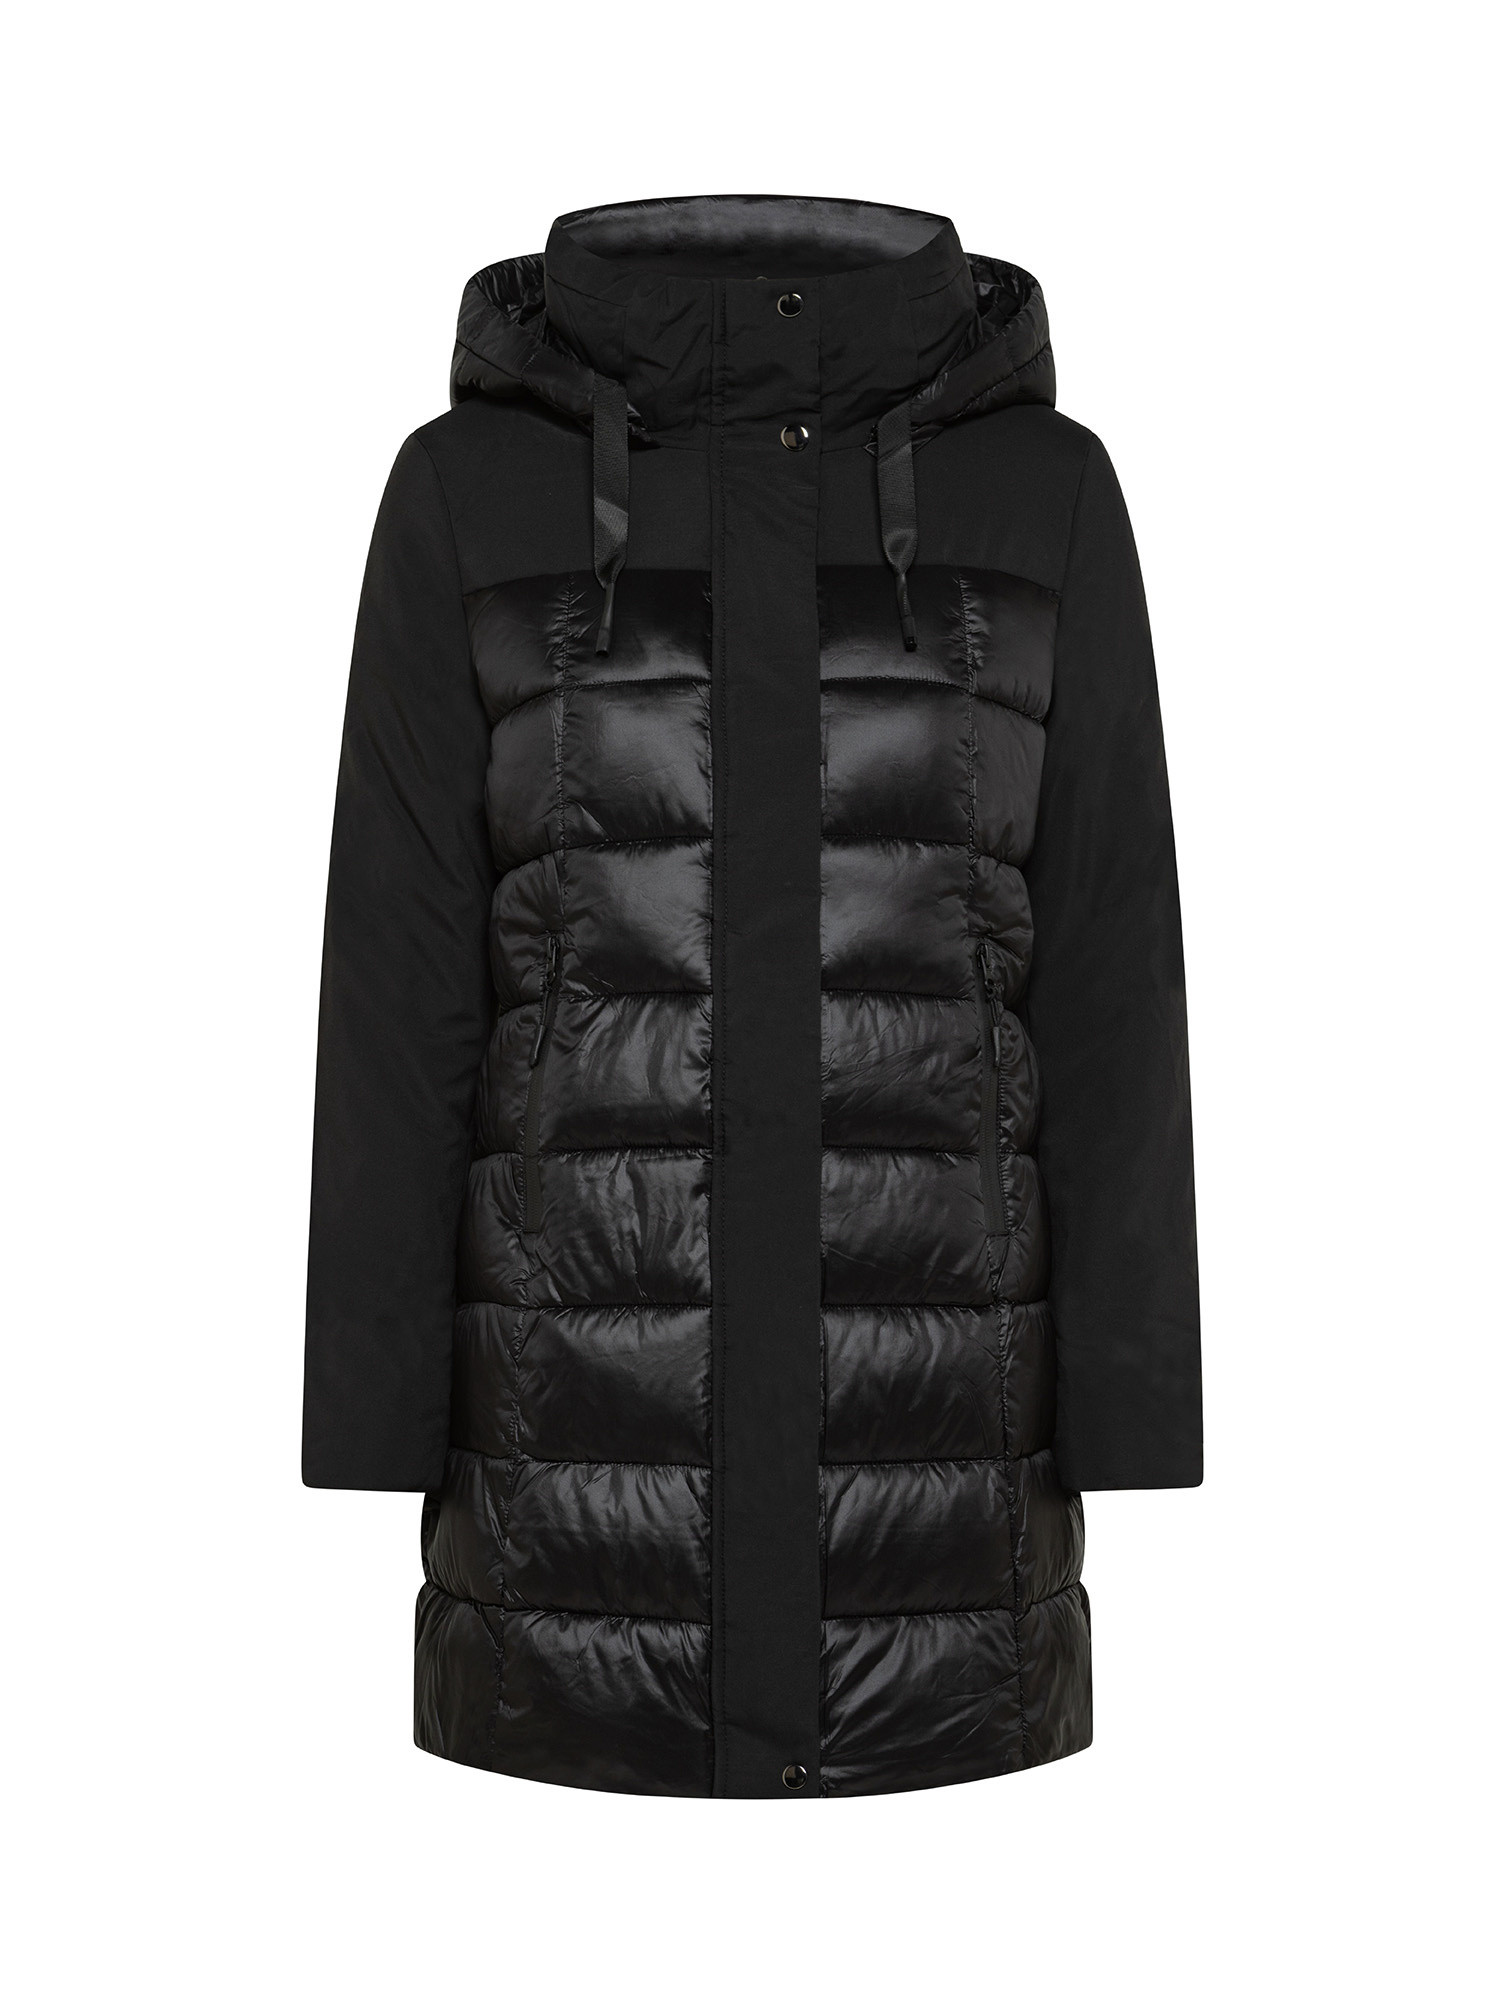 Koan - Hooded down jacket, Black, large image number 0